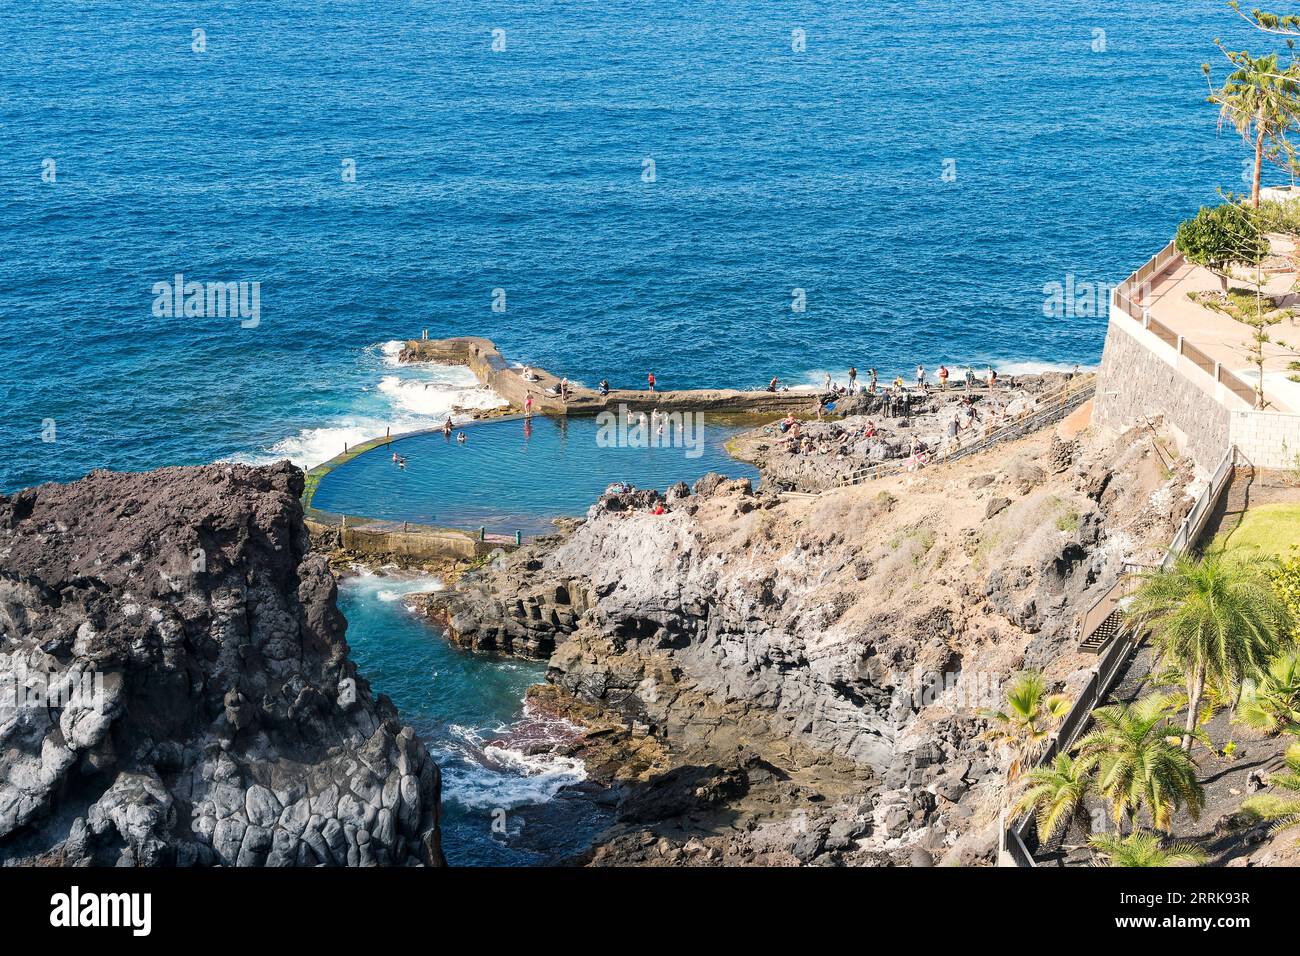 Tenerife, Isole Canarie, Acantilados de los Gigantes, piscina naturale, costa rocciosa Foto Stock